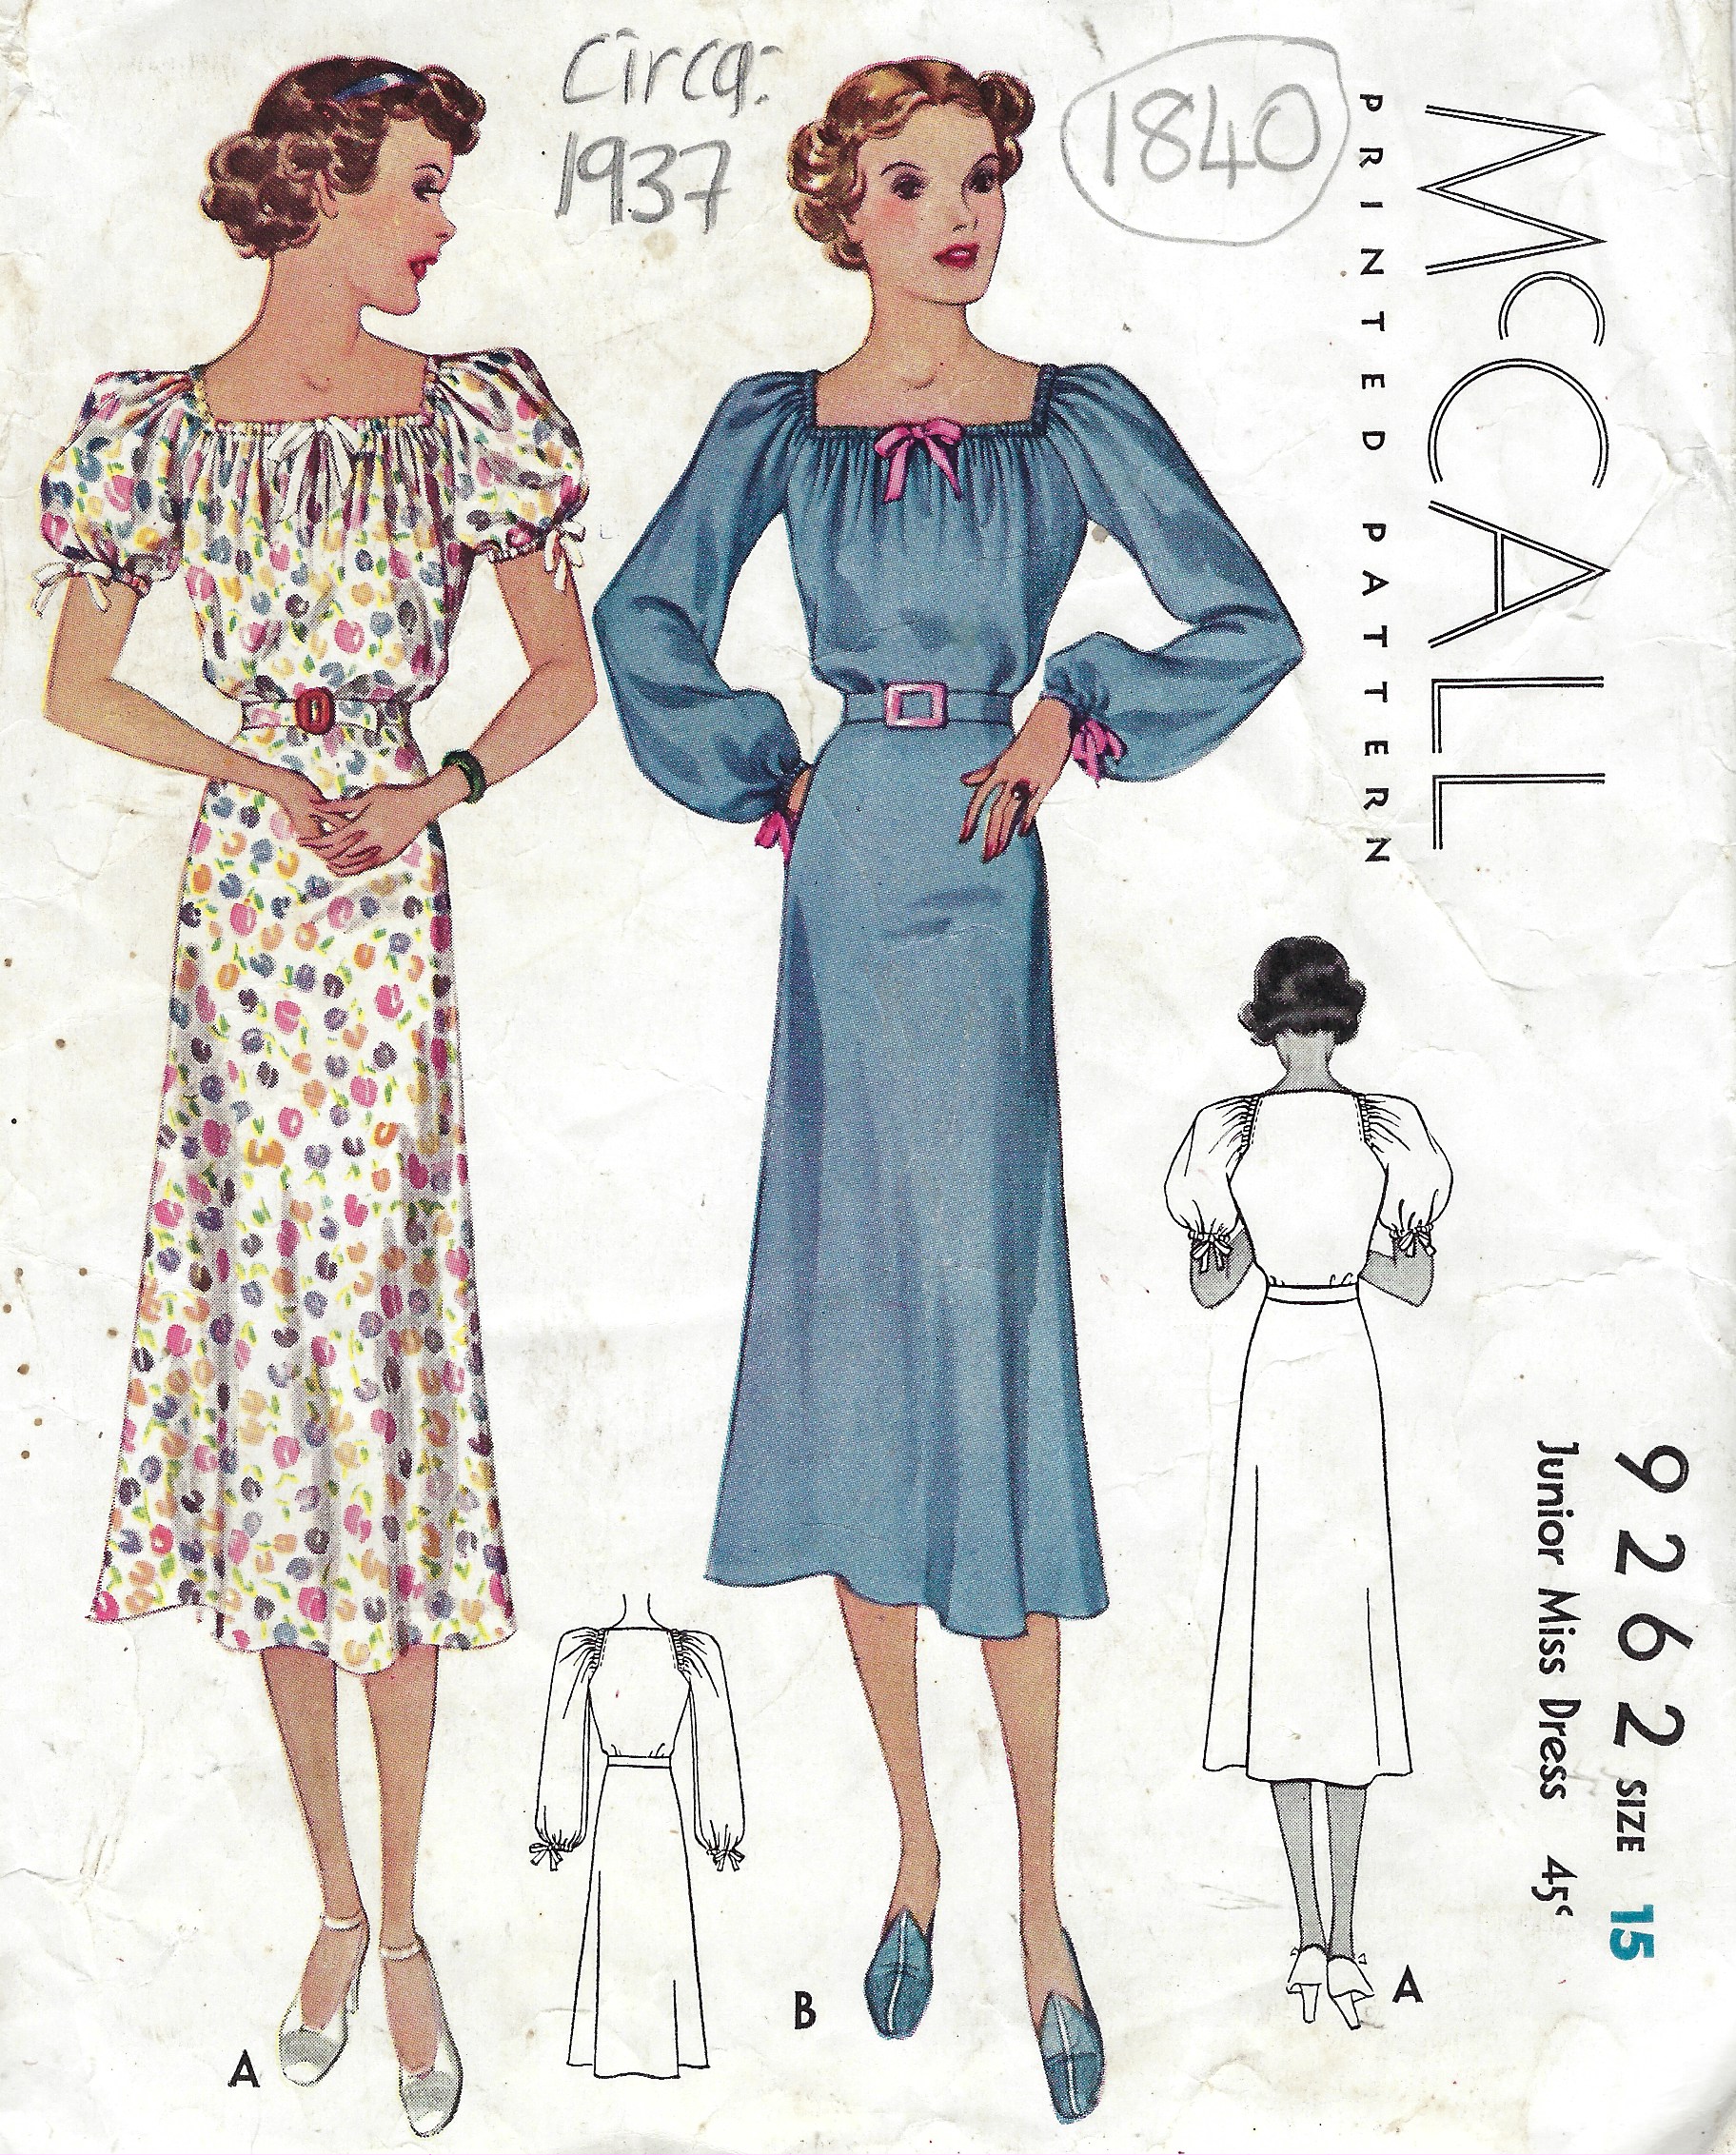 1937 Vintage Sewing Pattern B33" DRESS (1840) McCall 9262 - The Vintage